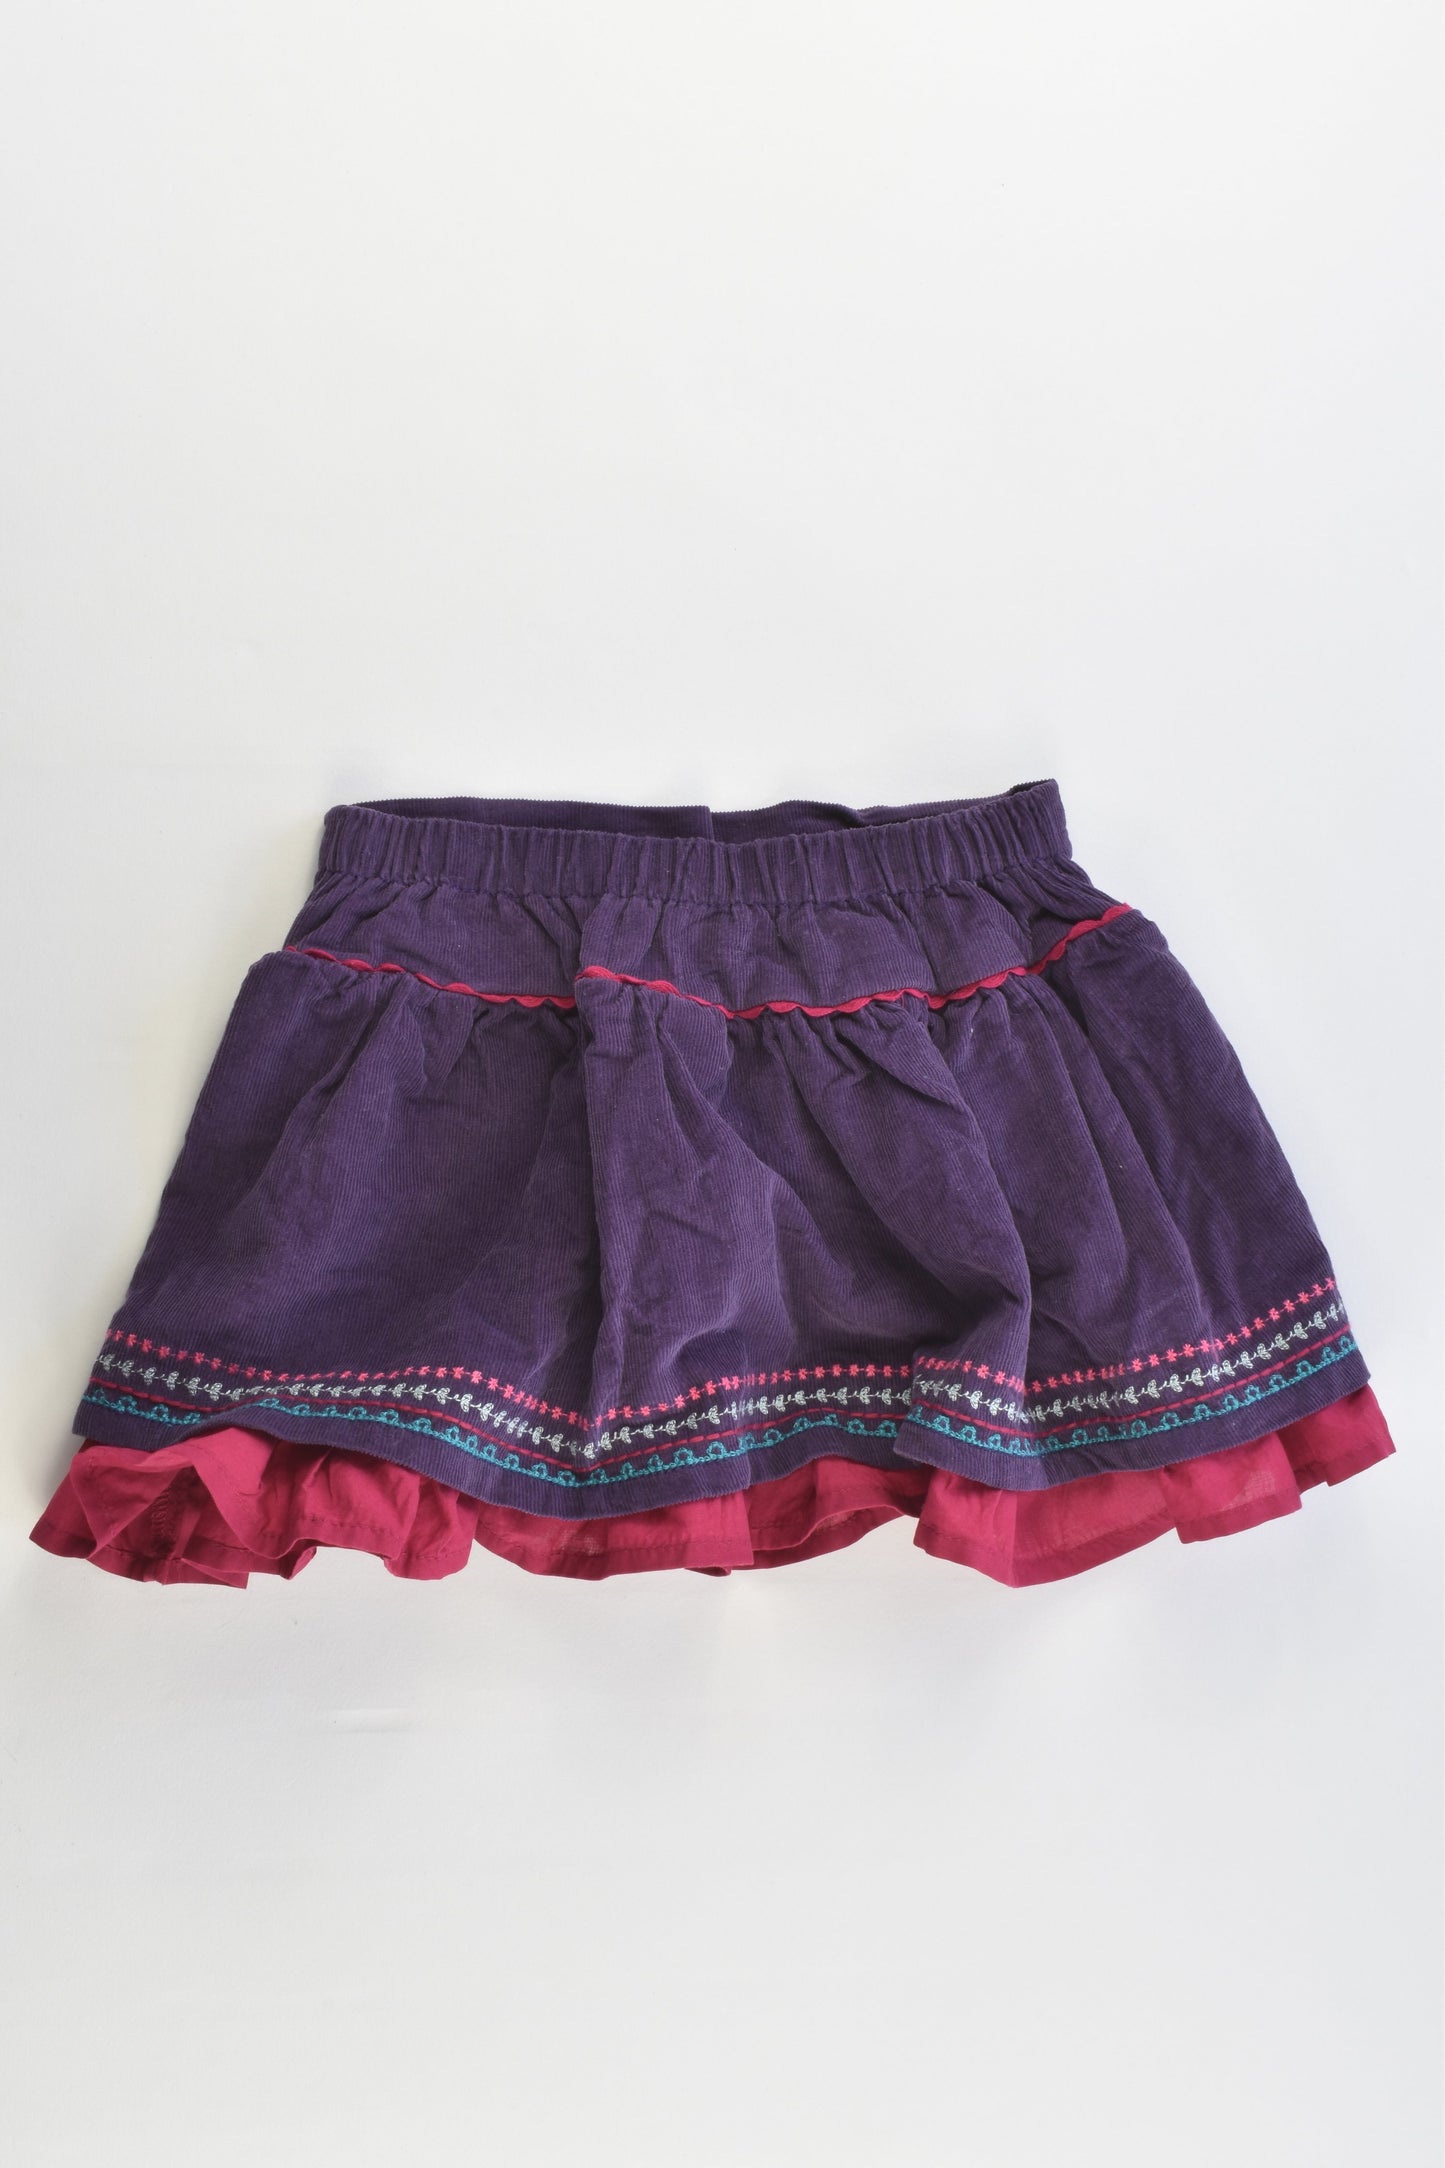 Target Size 2 (18-24 months) Lined Cord Matryoshka Skirt